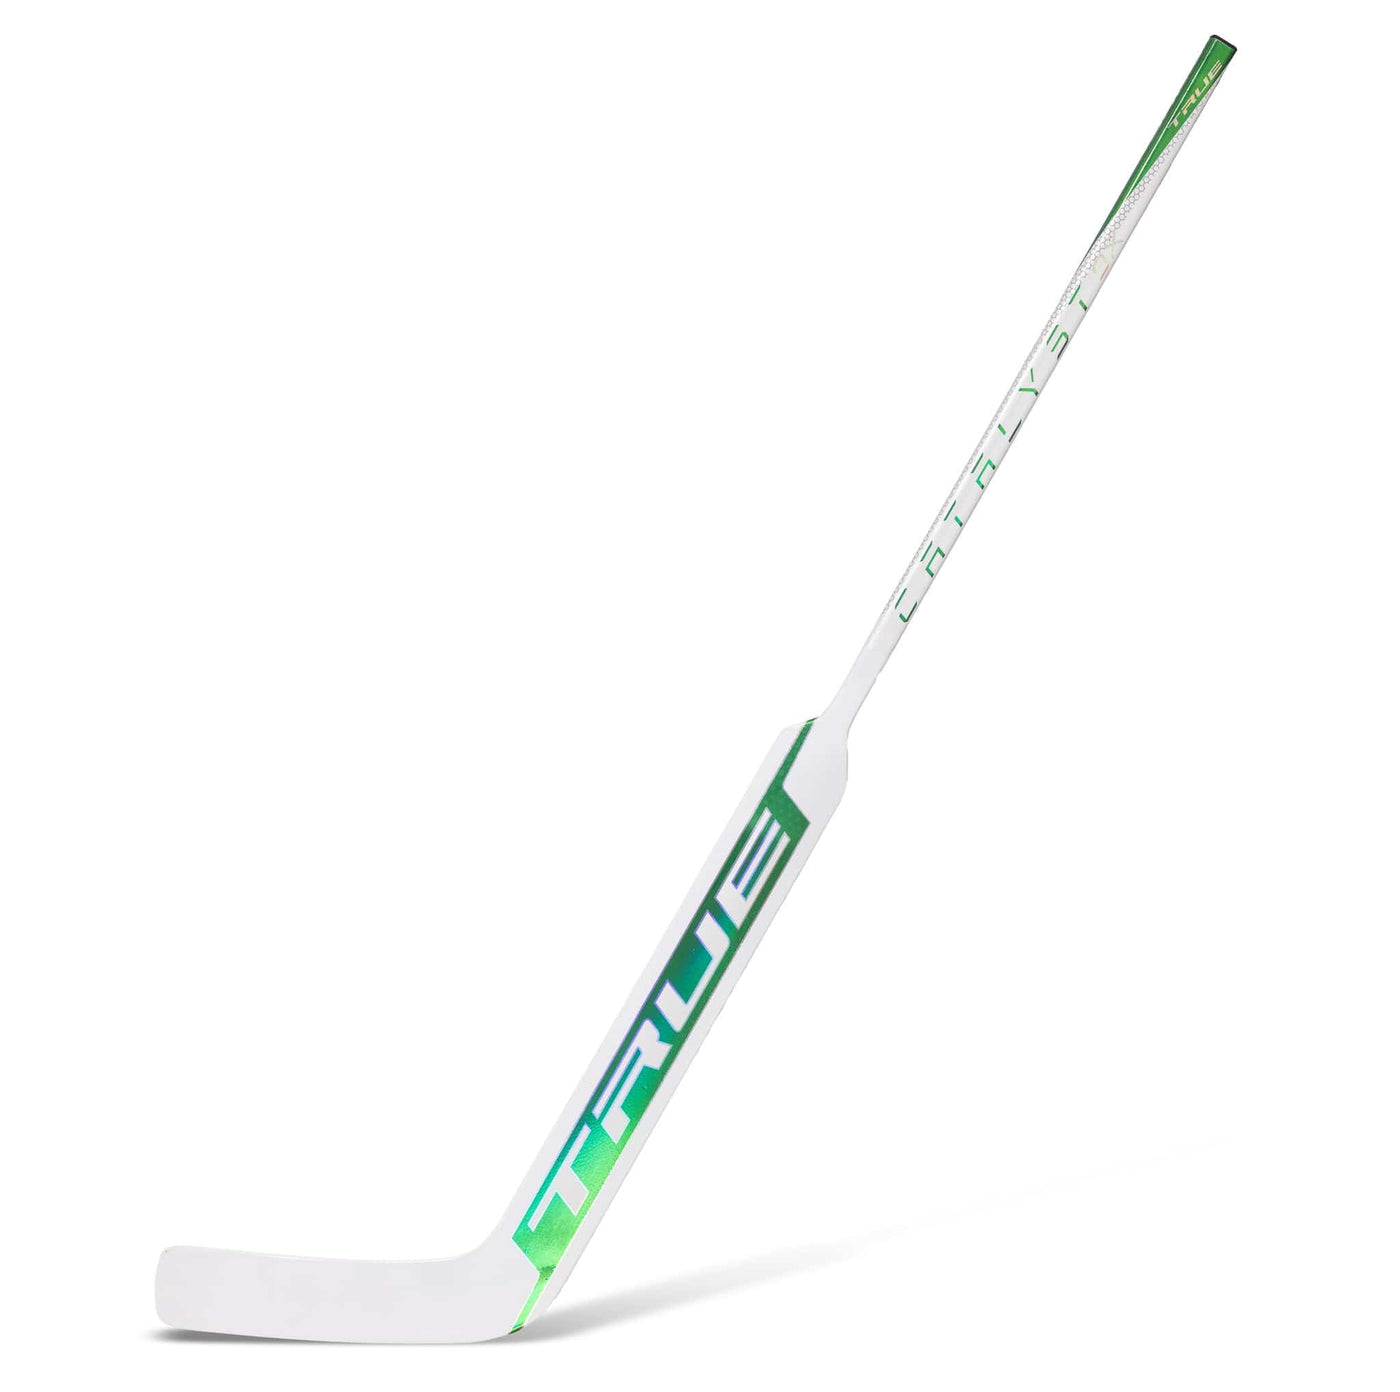 TRUE Catalyst 9X Senior Goalie Stick - 2021 - TheHockeyShop.com